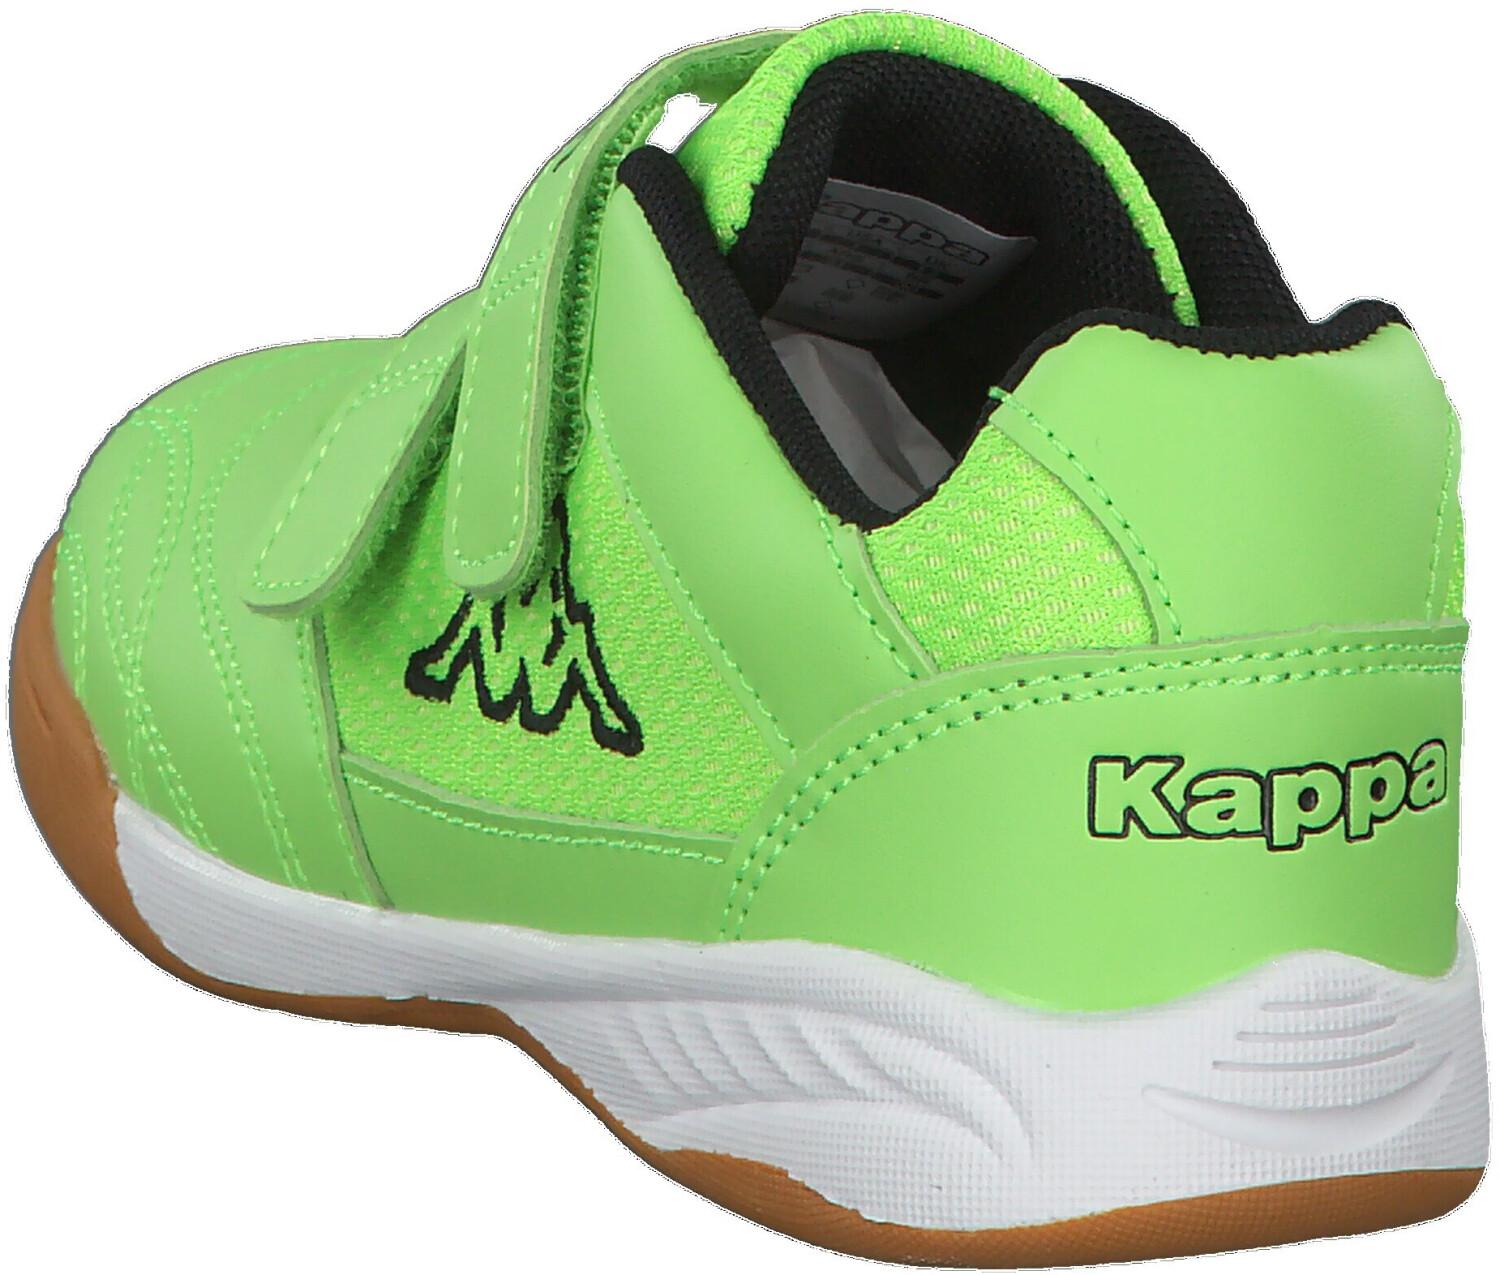 Kappa 260509K Green/Black ab 19,00 € | Preisvergleich bei